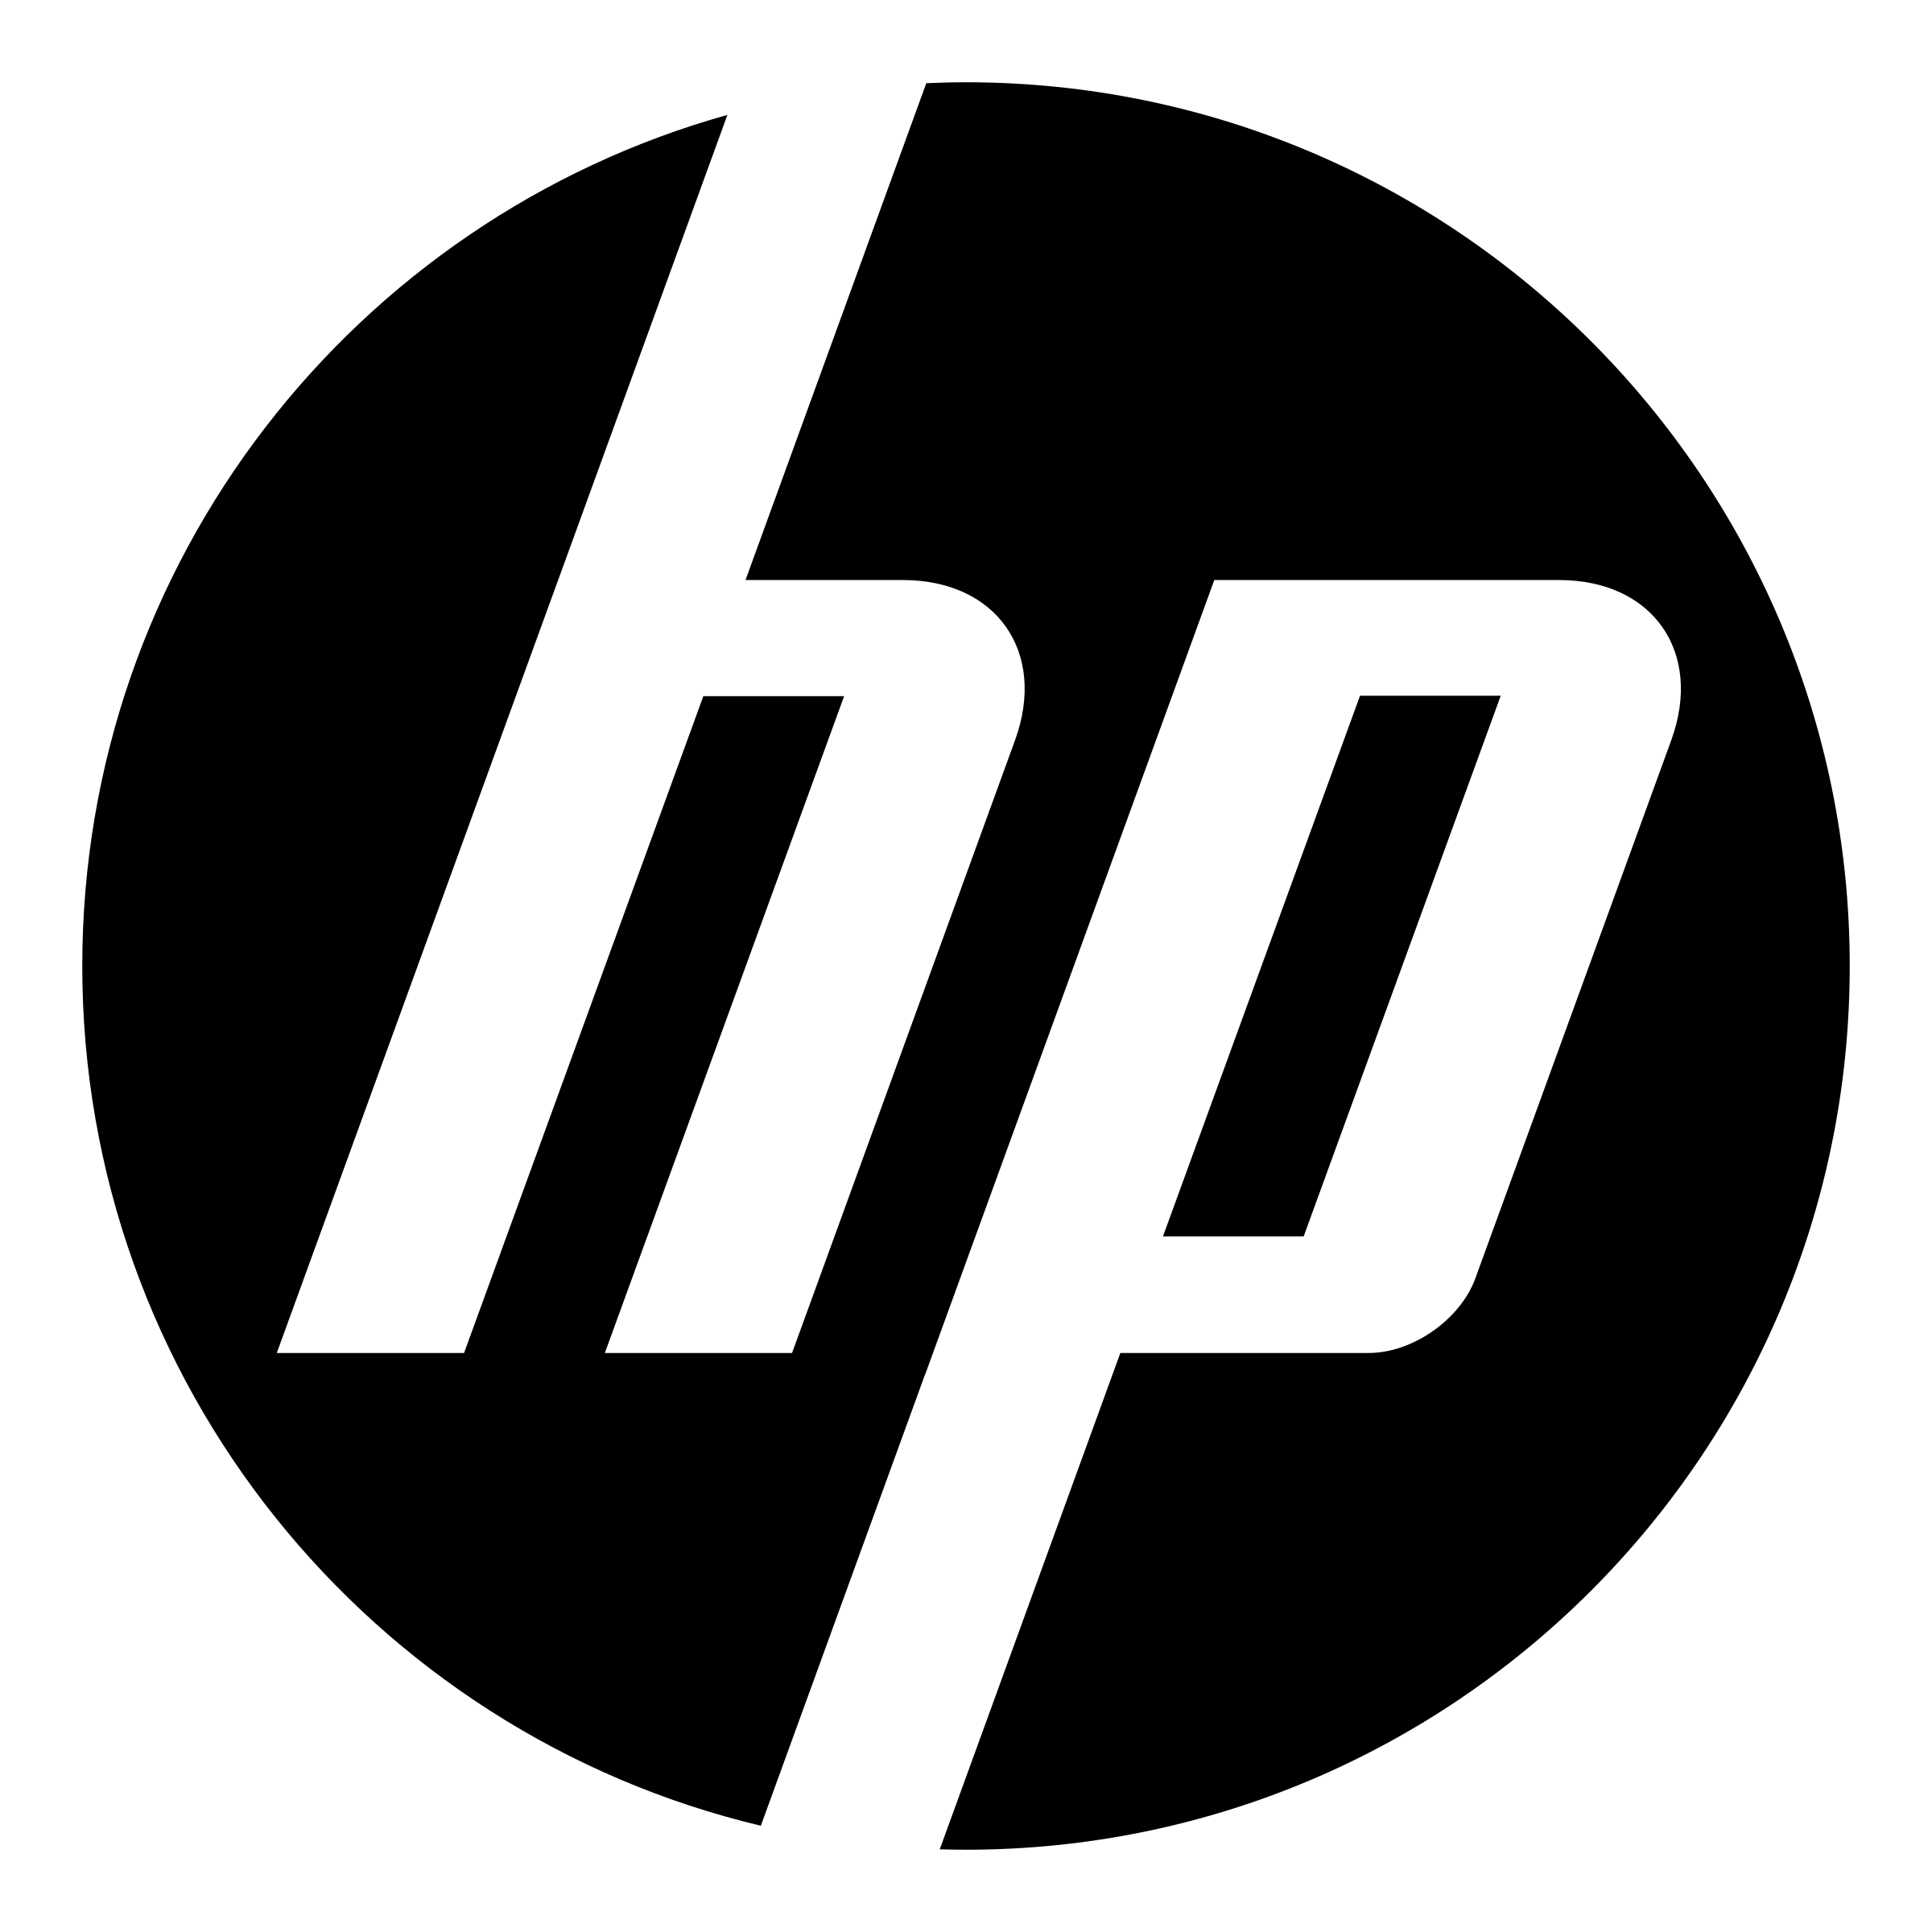 hewlett-packard-logo-black-and-white[1]